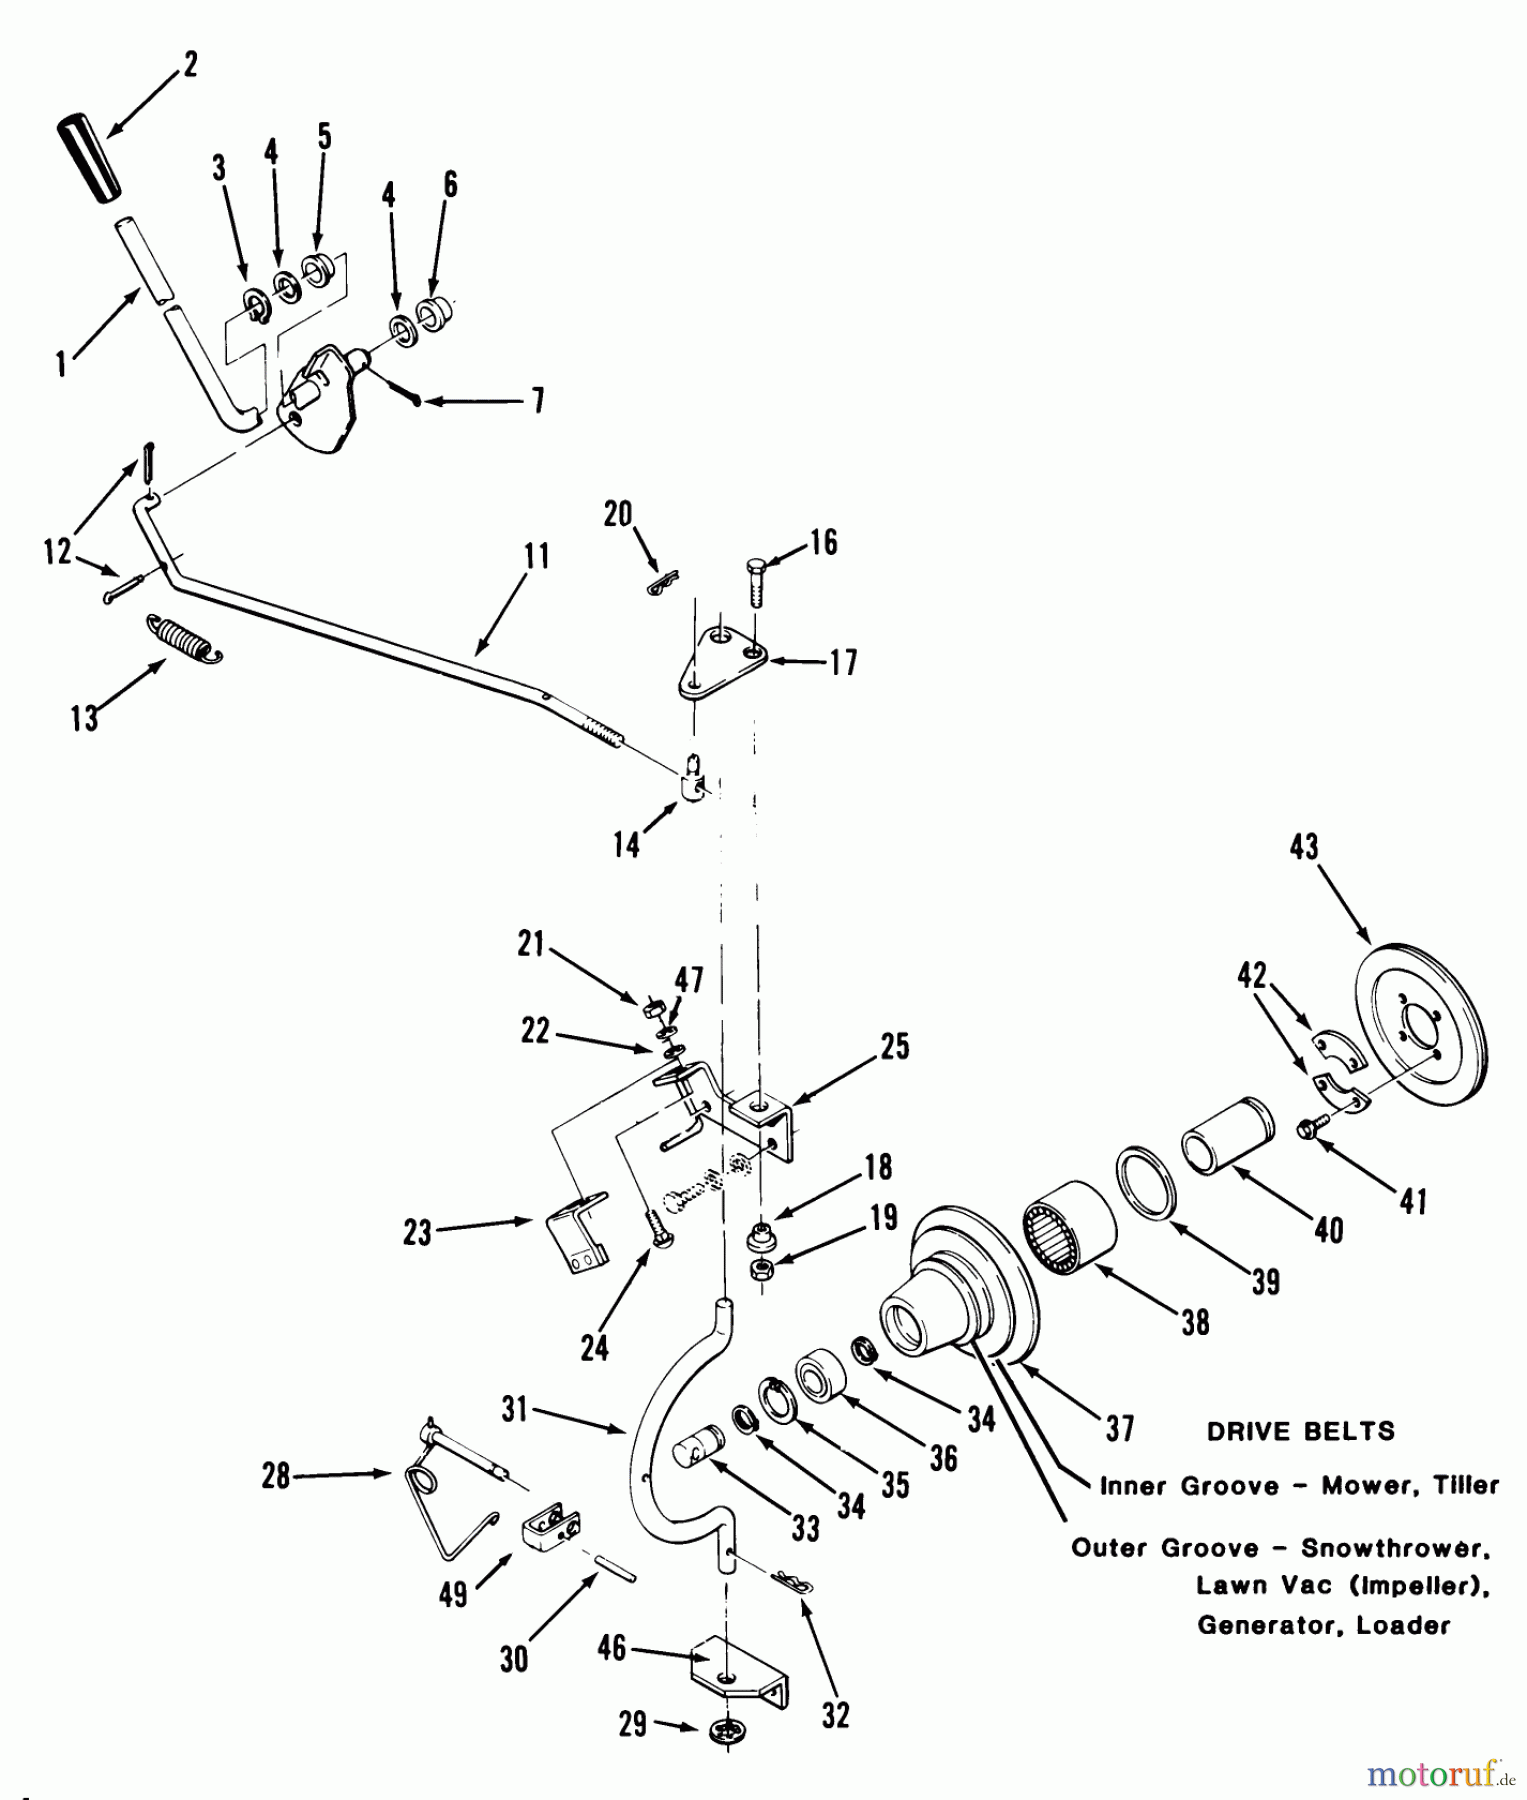  Toro Neu Mowers, Lawn & Garden Tractor Seite 1 21-12K806 (312-8) - Toro 312-8 Garden Tractor, 1989 PTO CLUTCH AND CONTROL